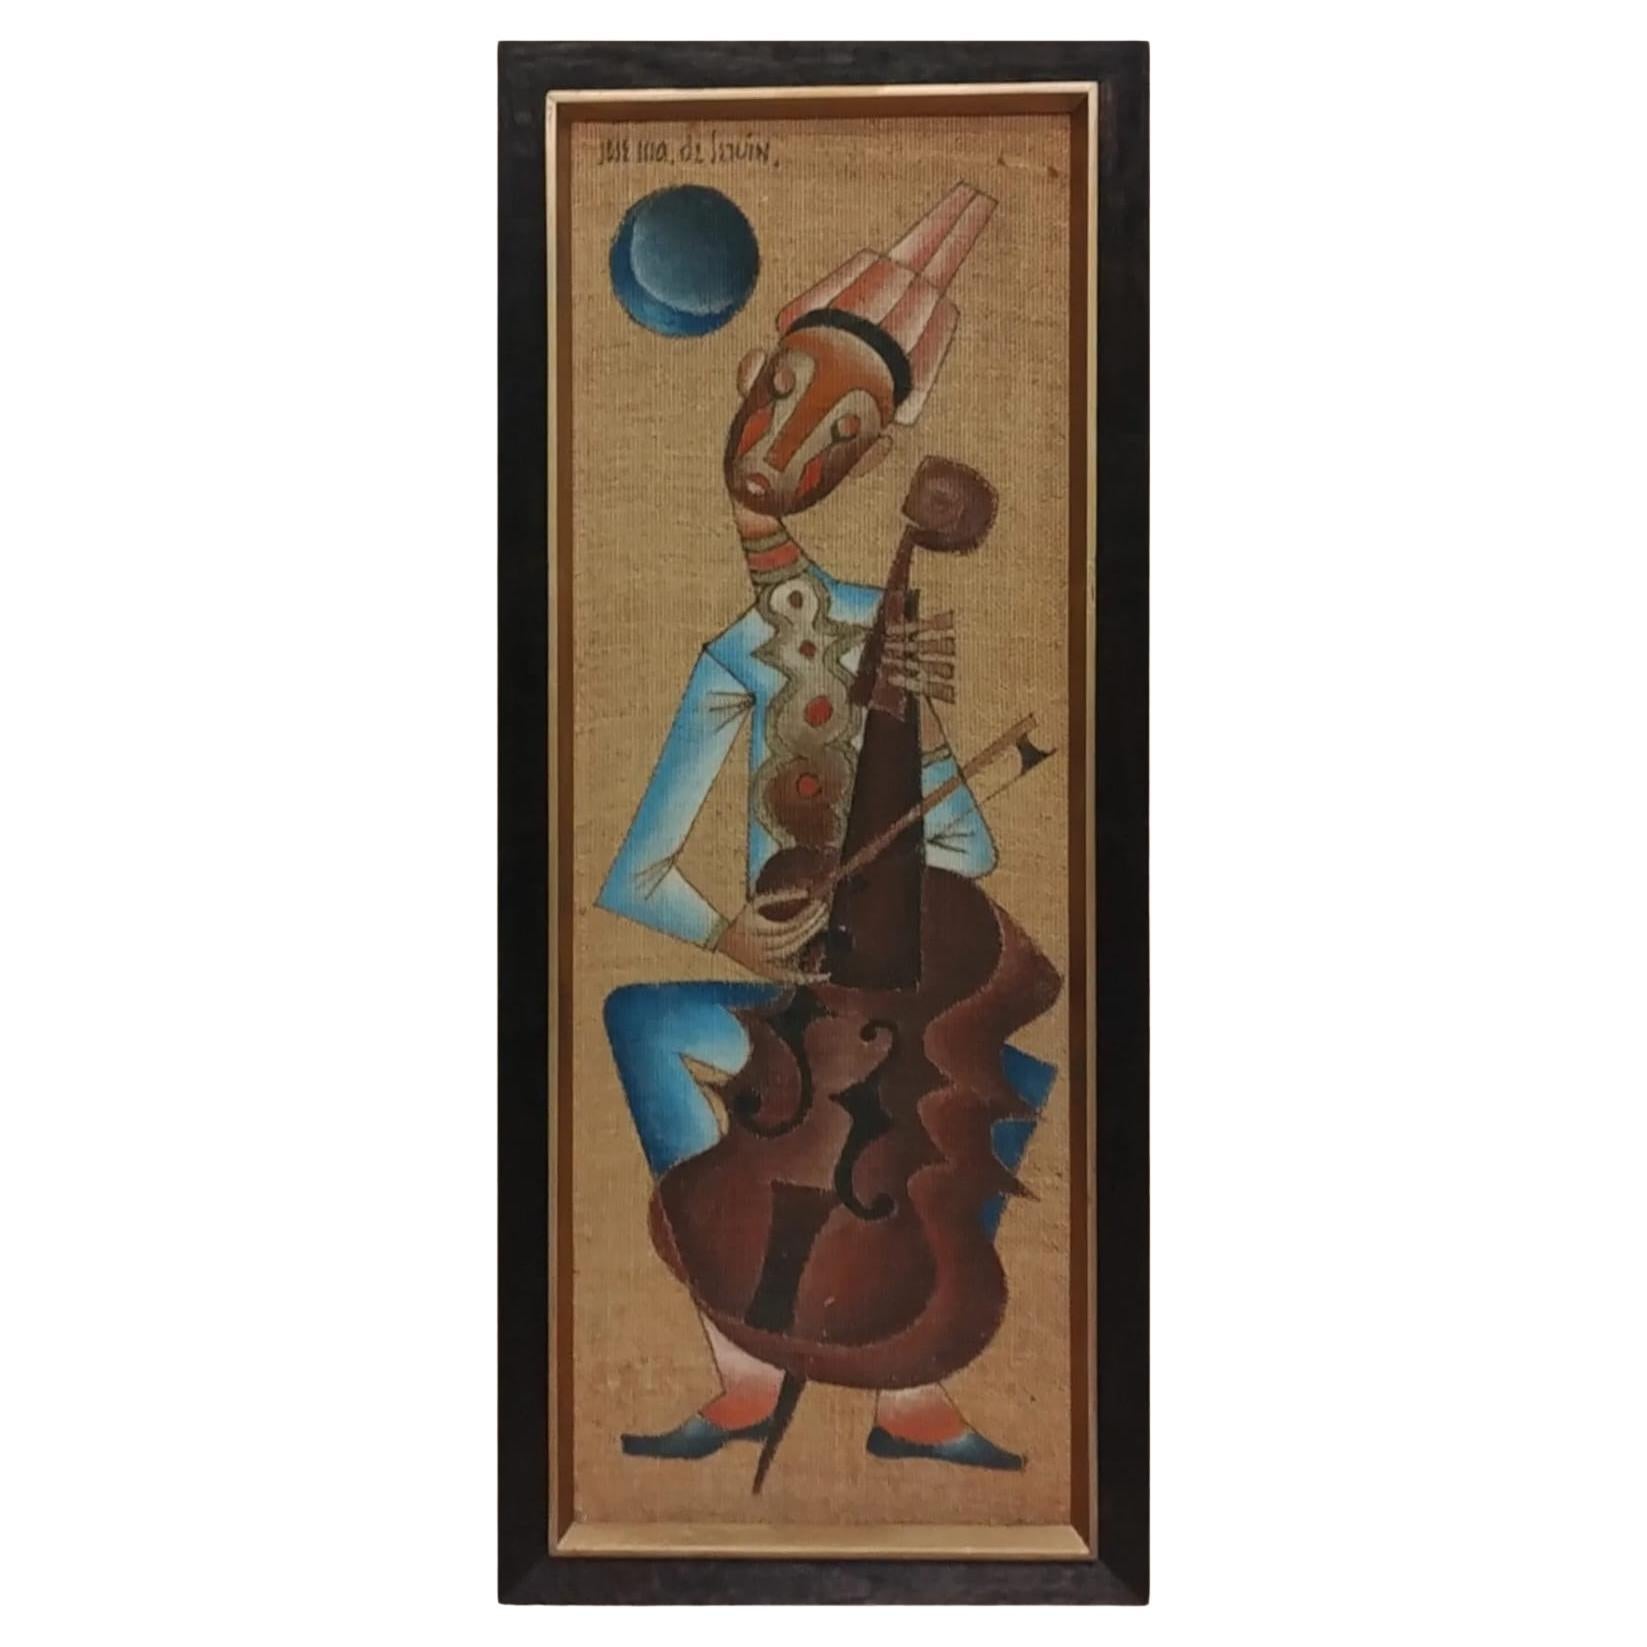 Belle grande peinture de José María de Servín représentant un joueur de Cello stylisé  en vente